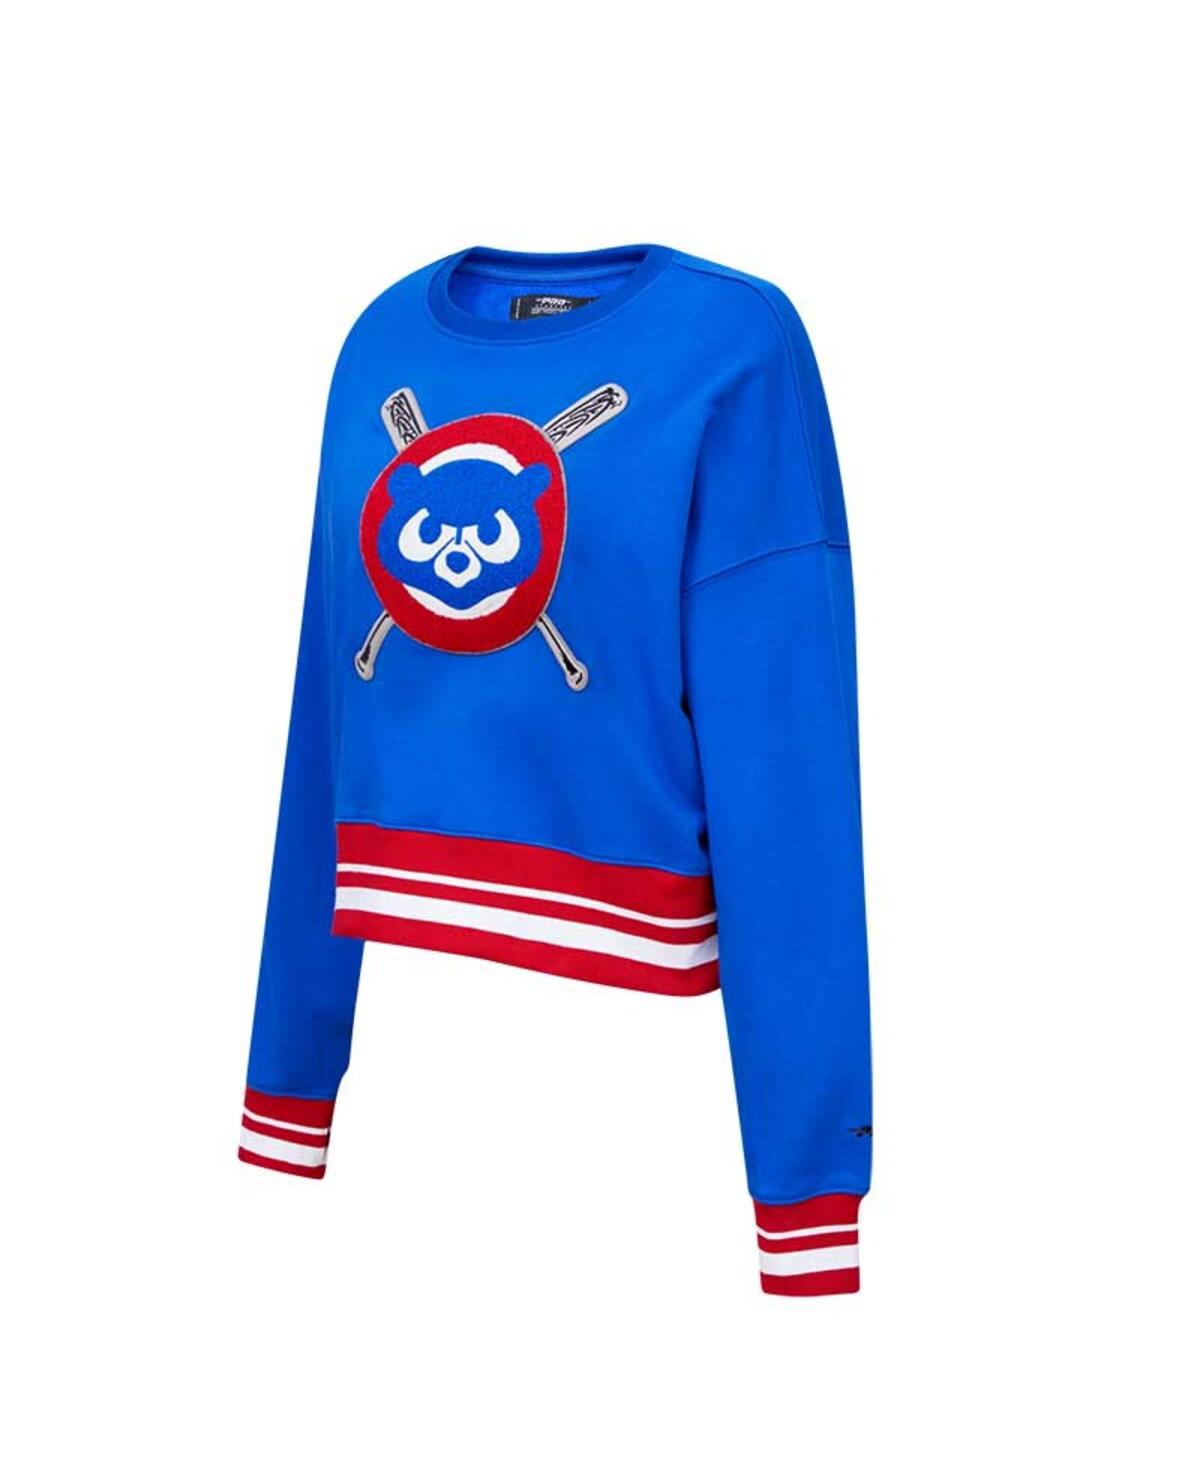 Shop Pro Standard Women's  Royal Chicago Cubs Mash Up Pullover Sweatshirt